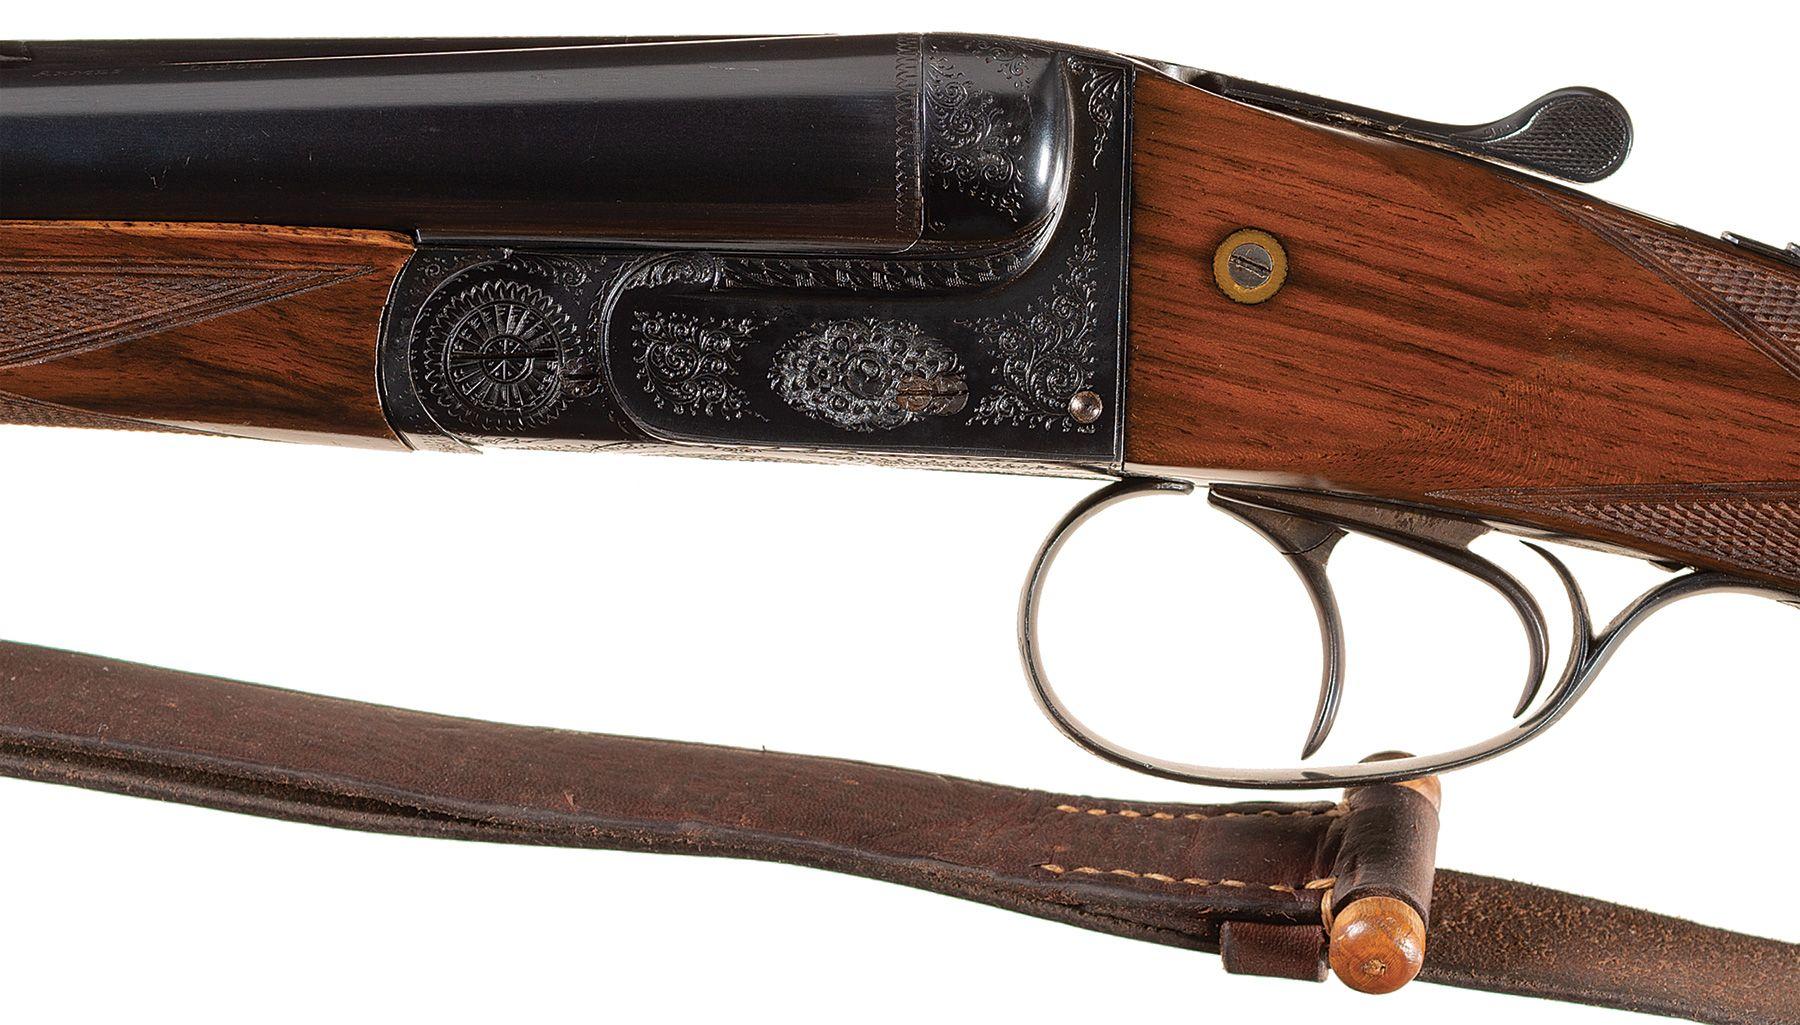 Engraved J. Lejeune & Fauve Liege Side by Side Box Lock Rifle wi